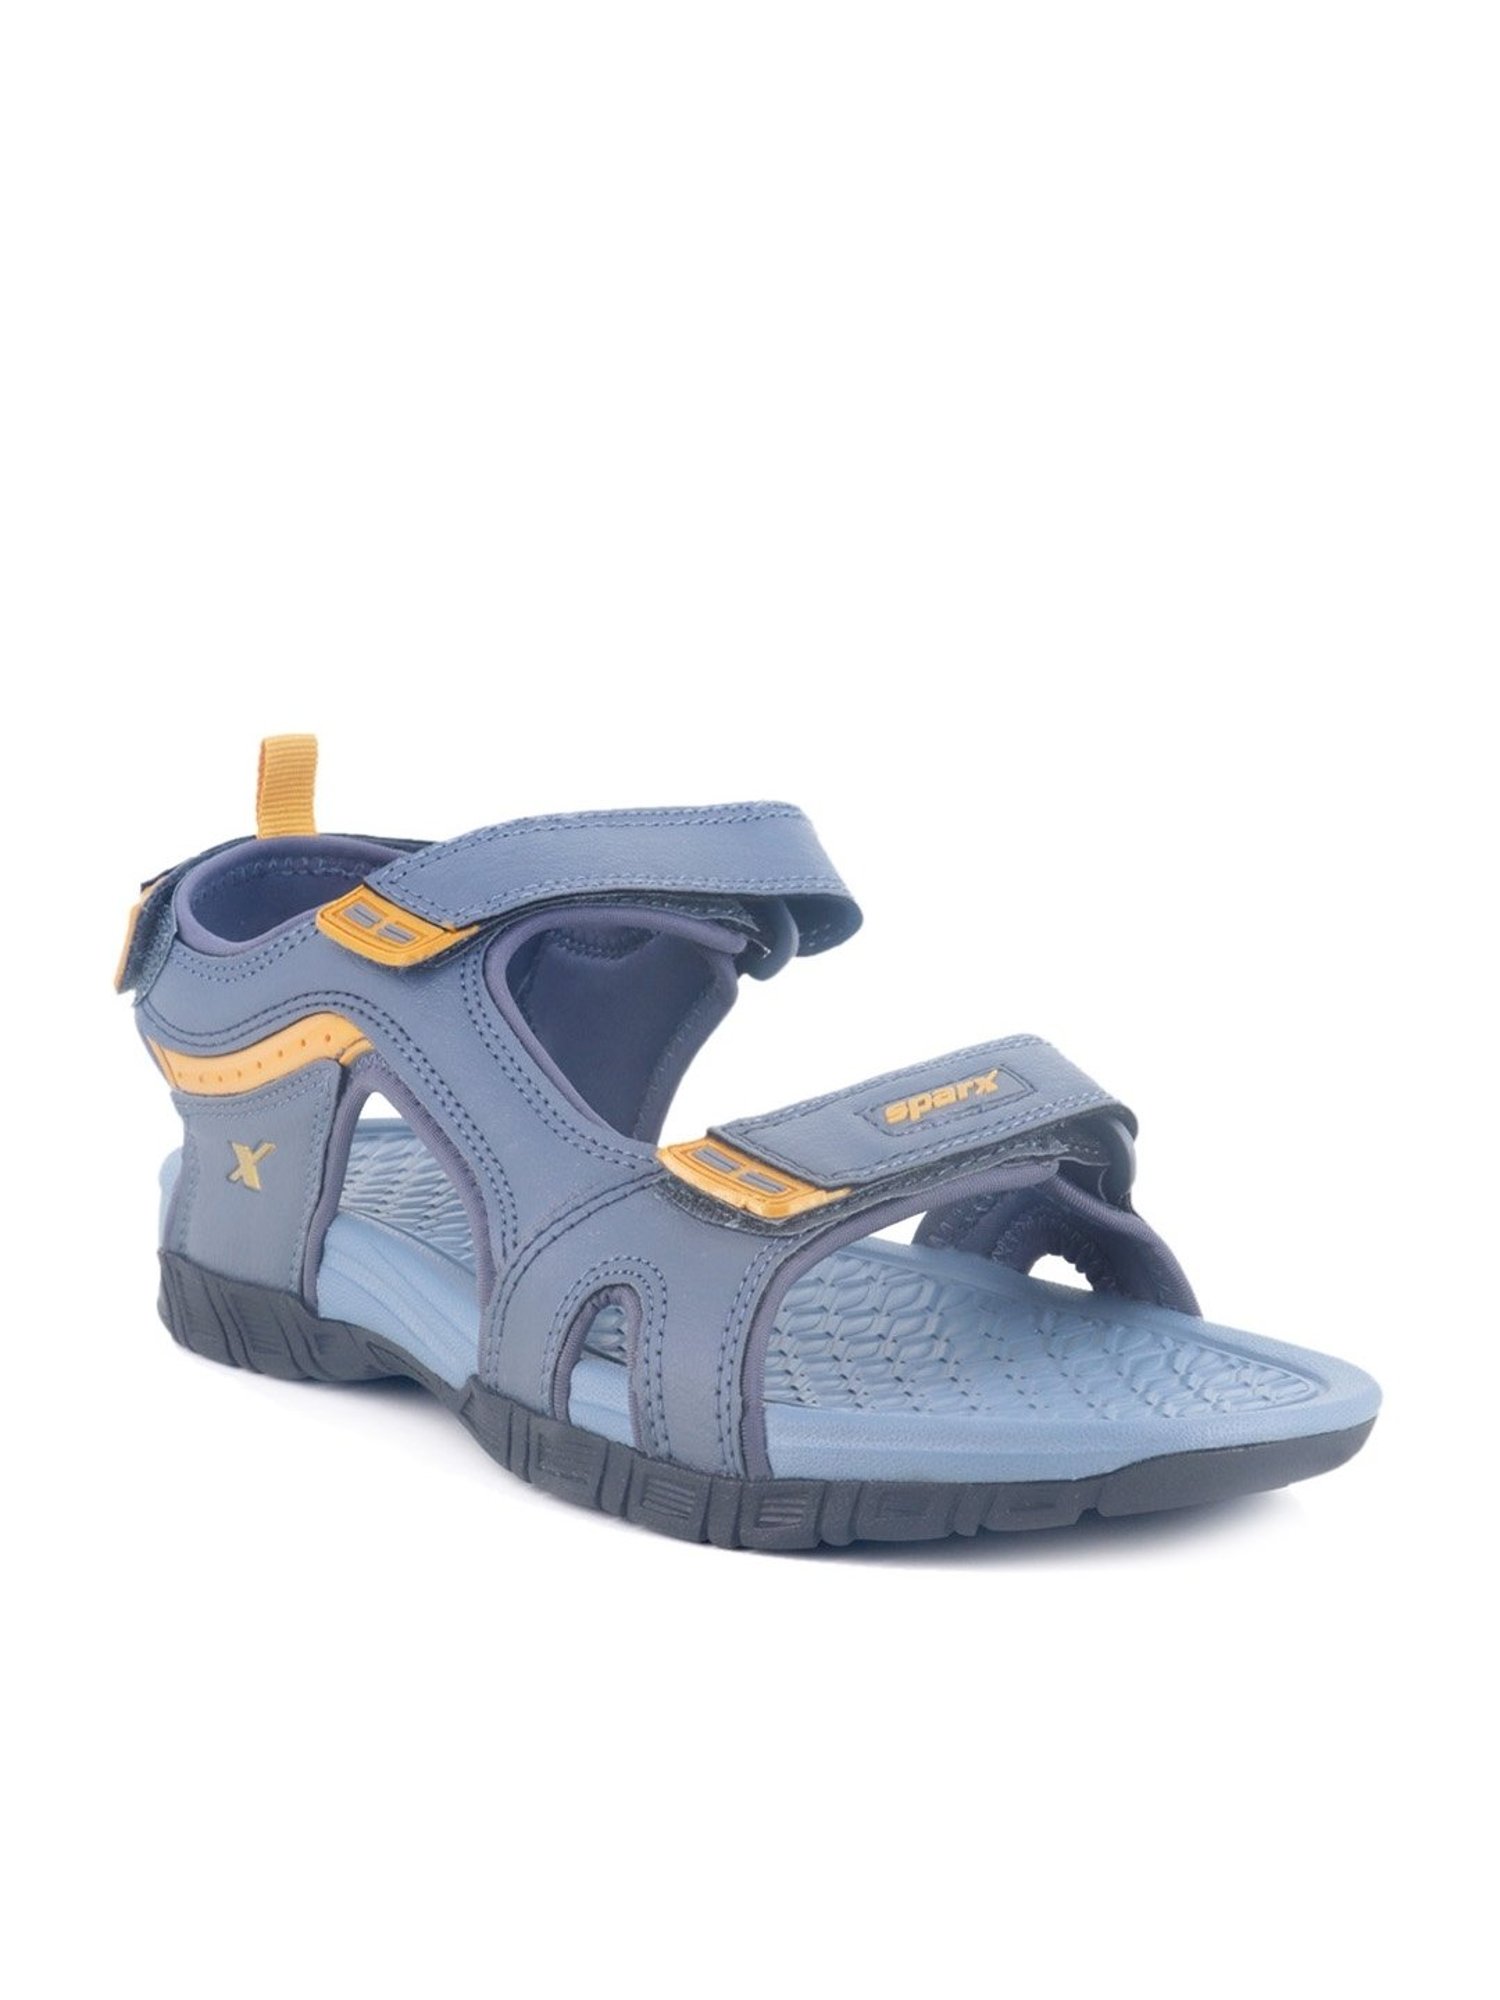 Sparx Men's Navy Royal Blue Floater Sandals-7 Kids UK (Ss0493g) :  Amazon.in: Shoes & Handbags